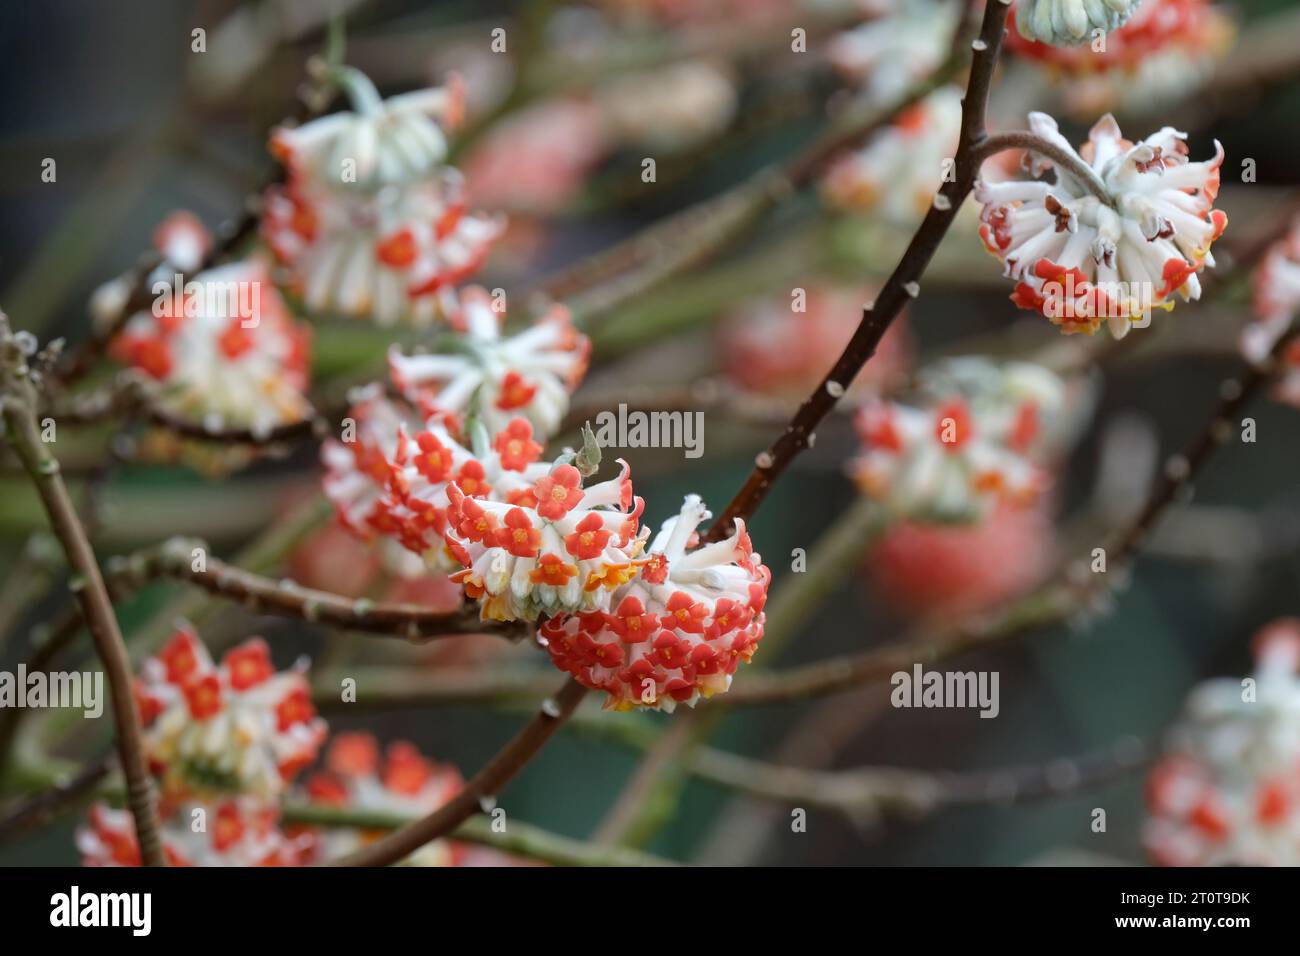 Drago rosso Edgeworthia chrysantha, arbusto cinese deciduo fiorito in inverno, infiorescenze arrotondate di fiori rossi d'arancio Foto Stock